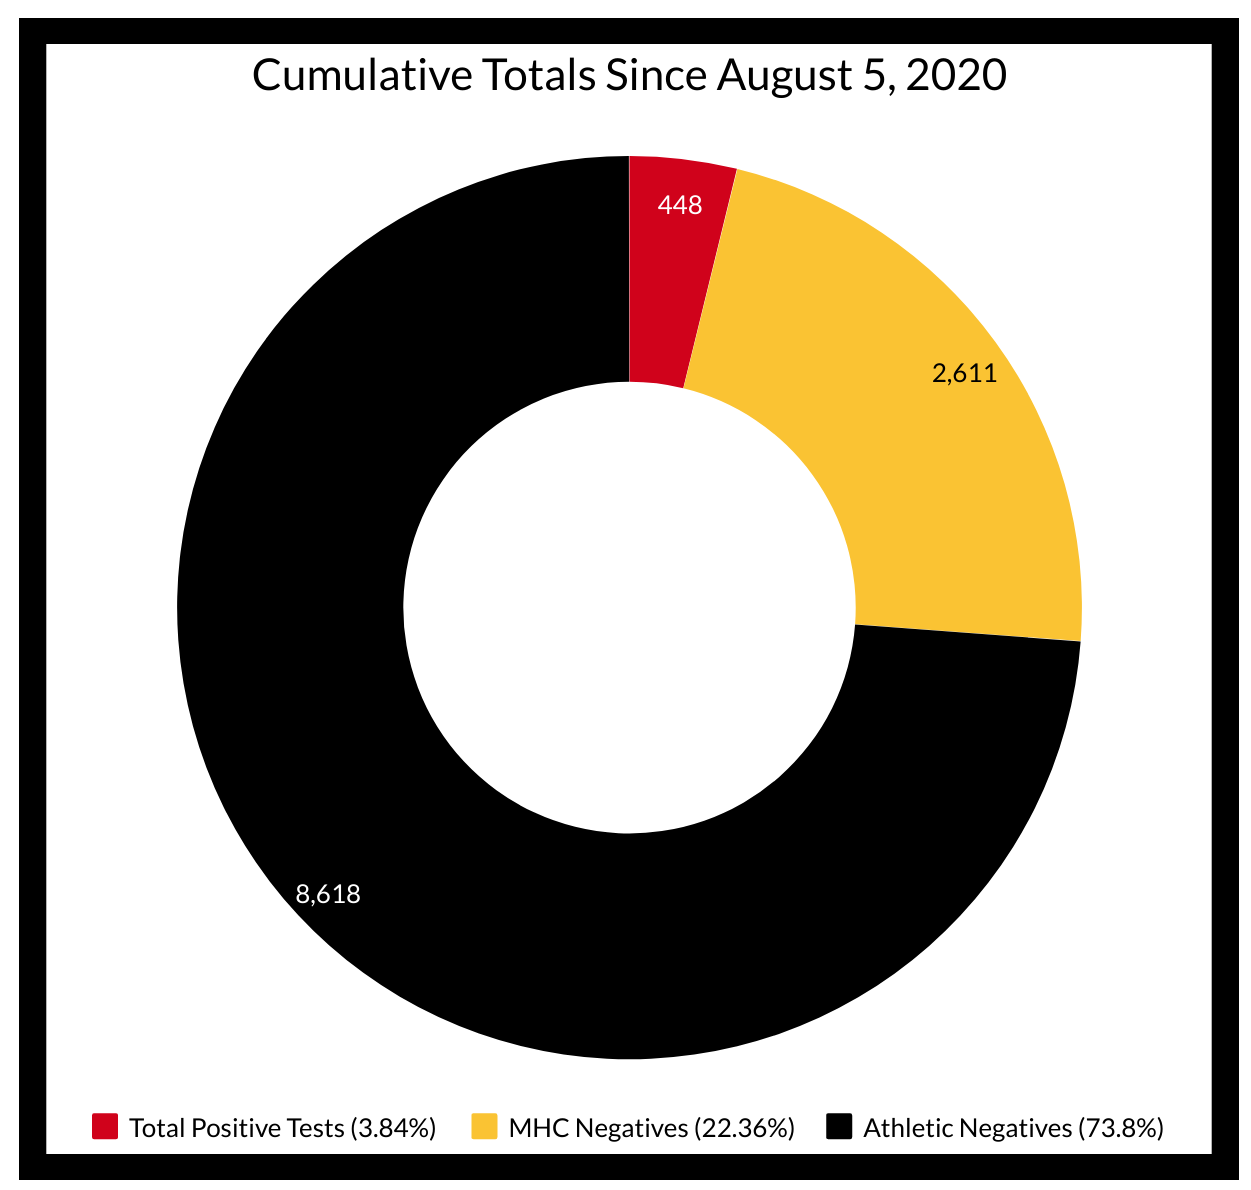 Cumulative Testing Data Since August 5, 2020